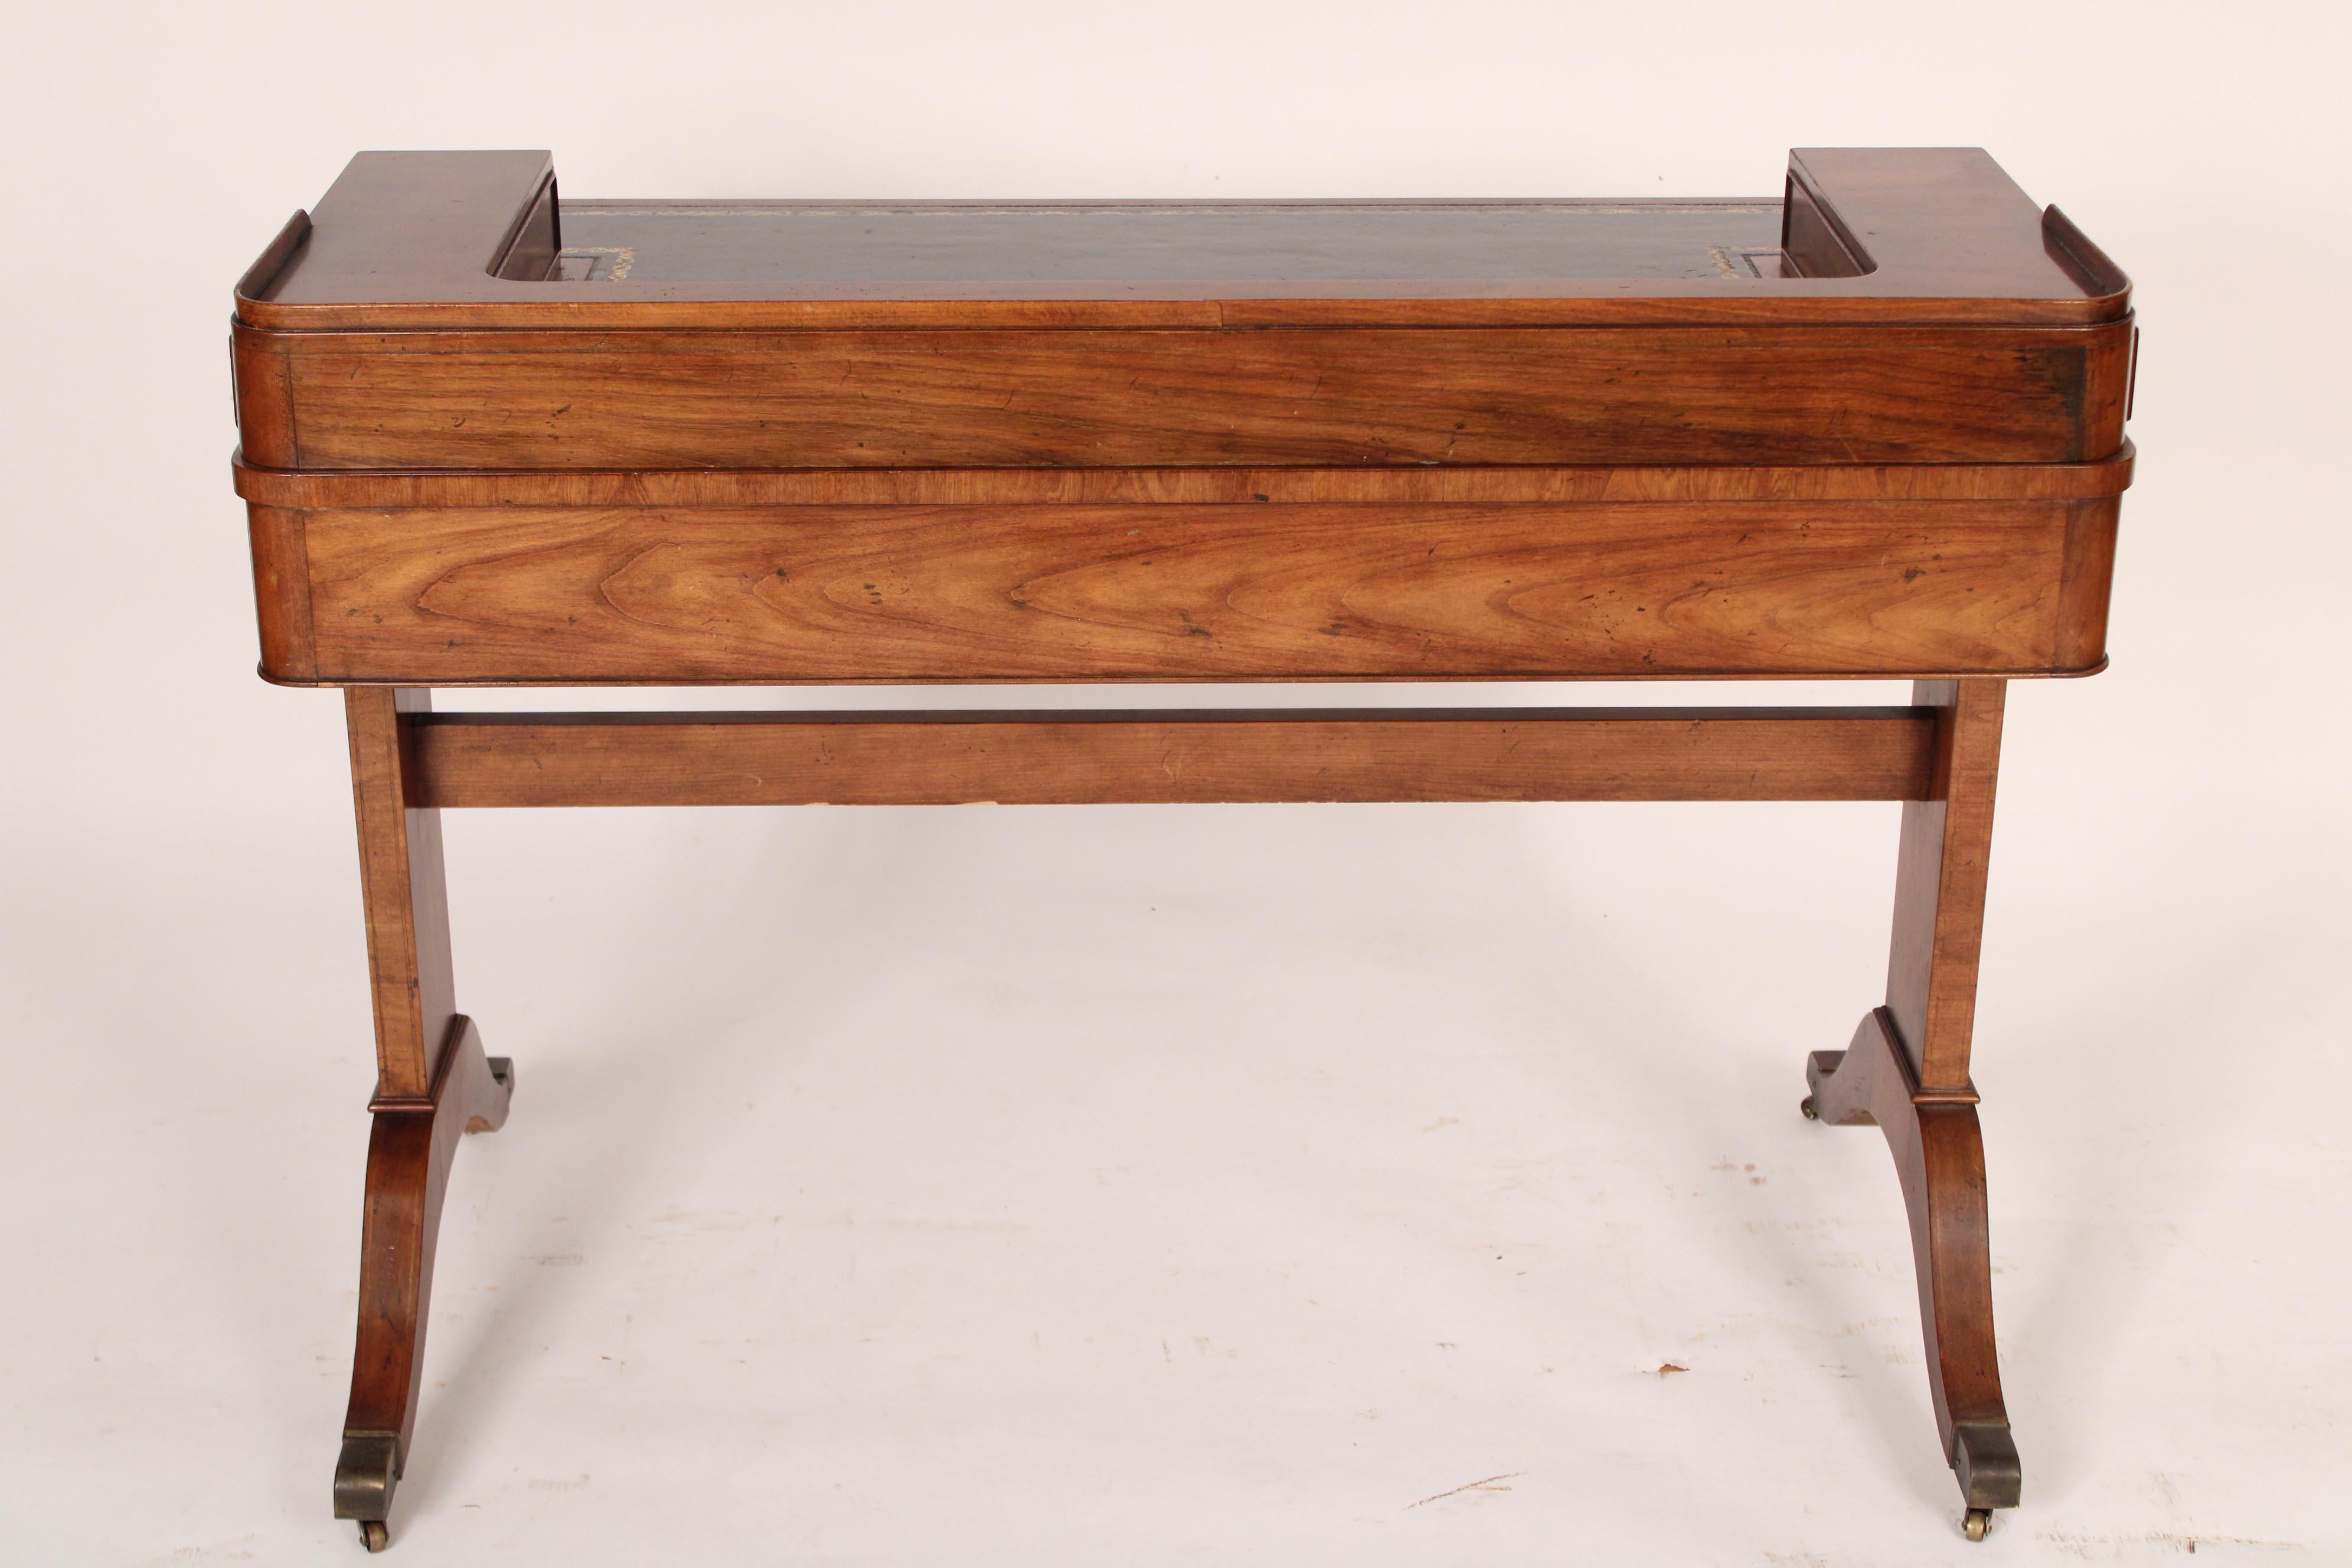 Late 20th Century English Regency Mahogany Writing Table Made by Baker Furniture Company